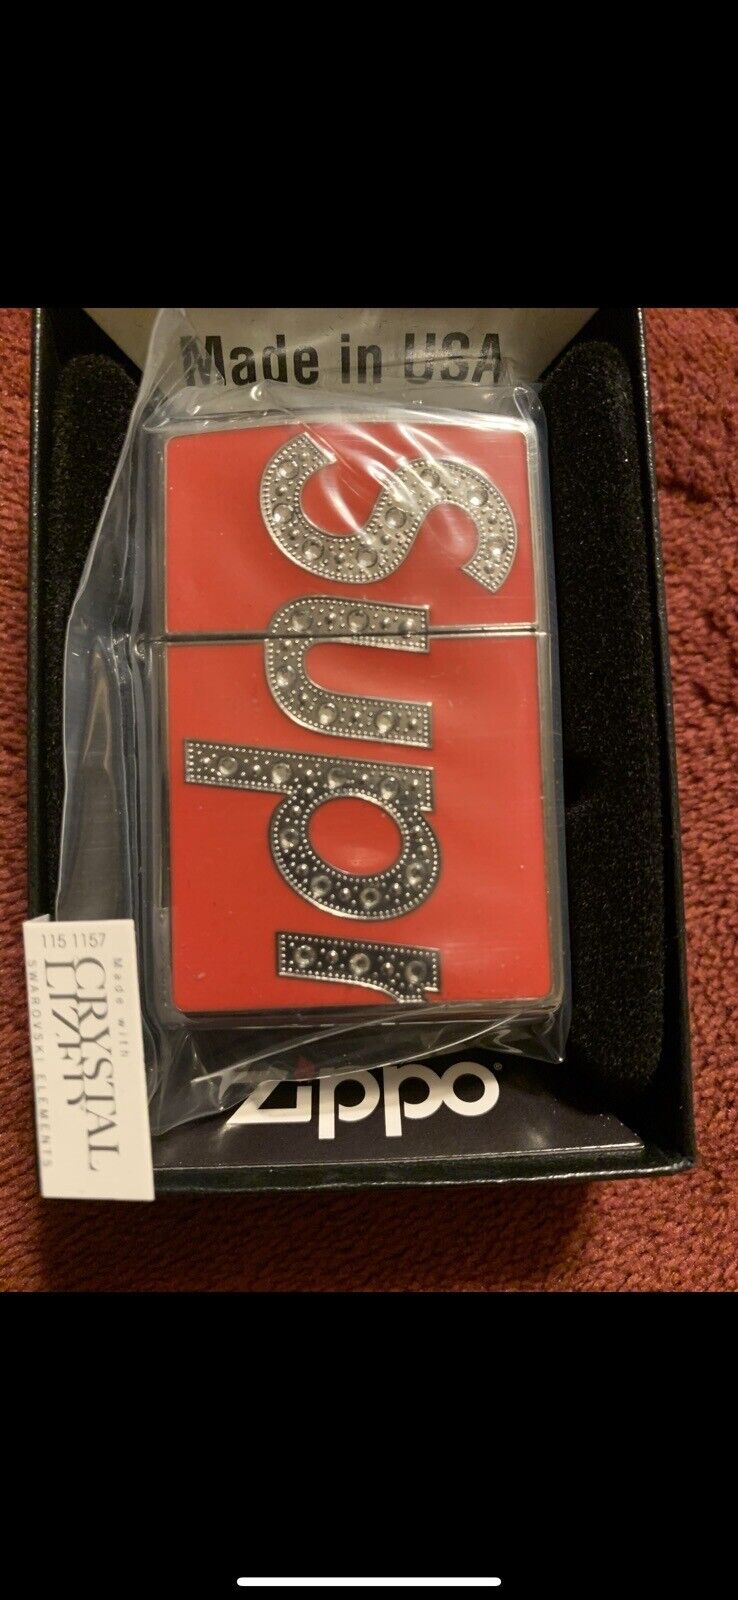 supreme swarovski zippo lighter